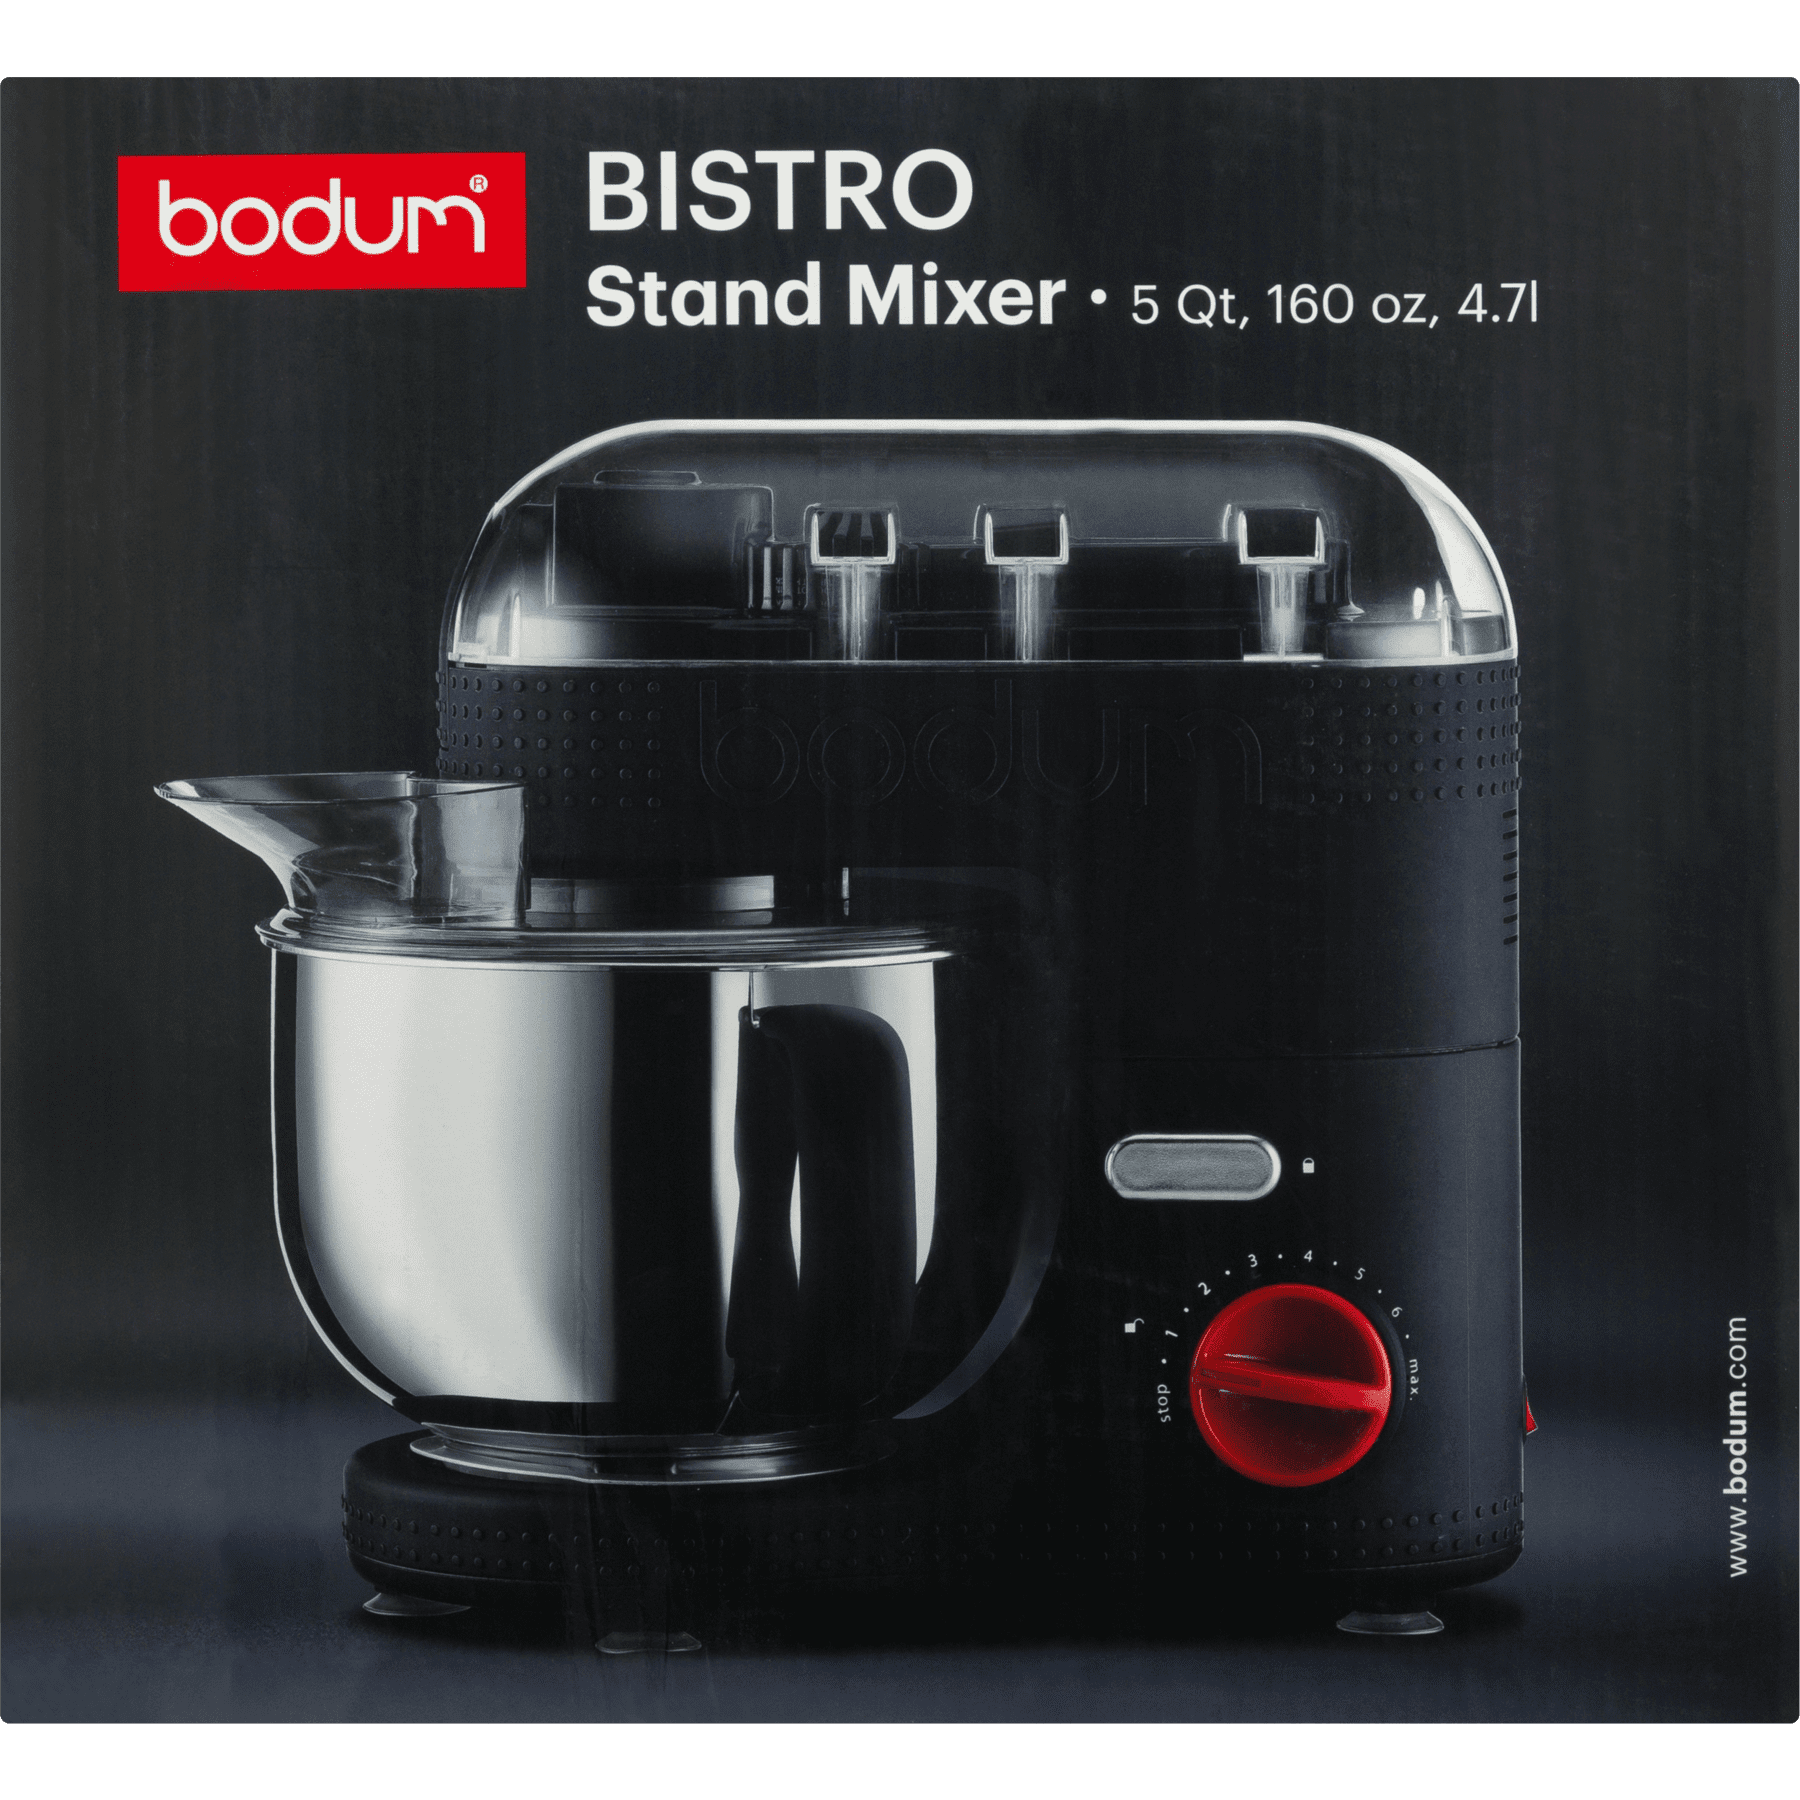 Bodum Bistro Electric Stand Mixer, 4.7 L, 160 oz Black